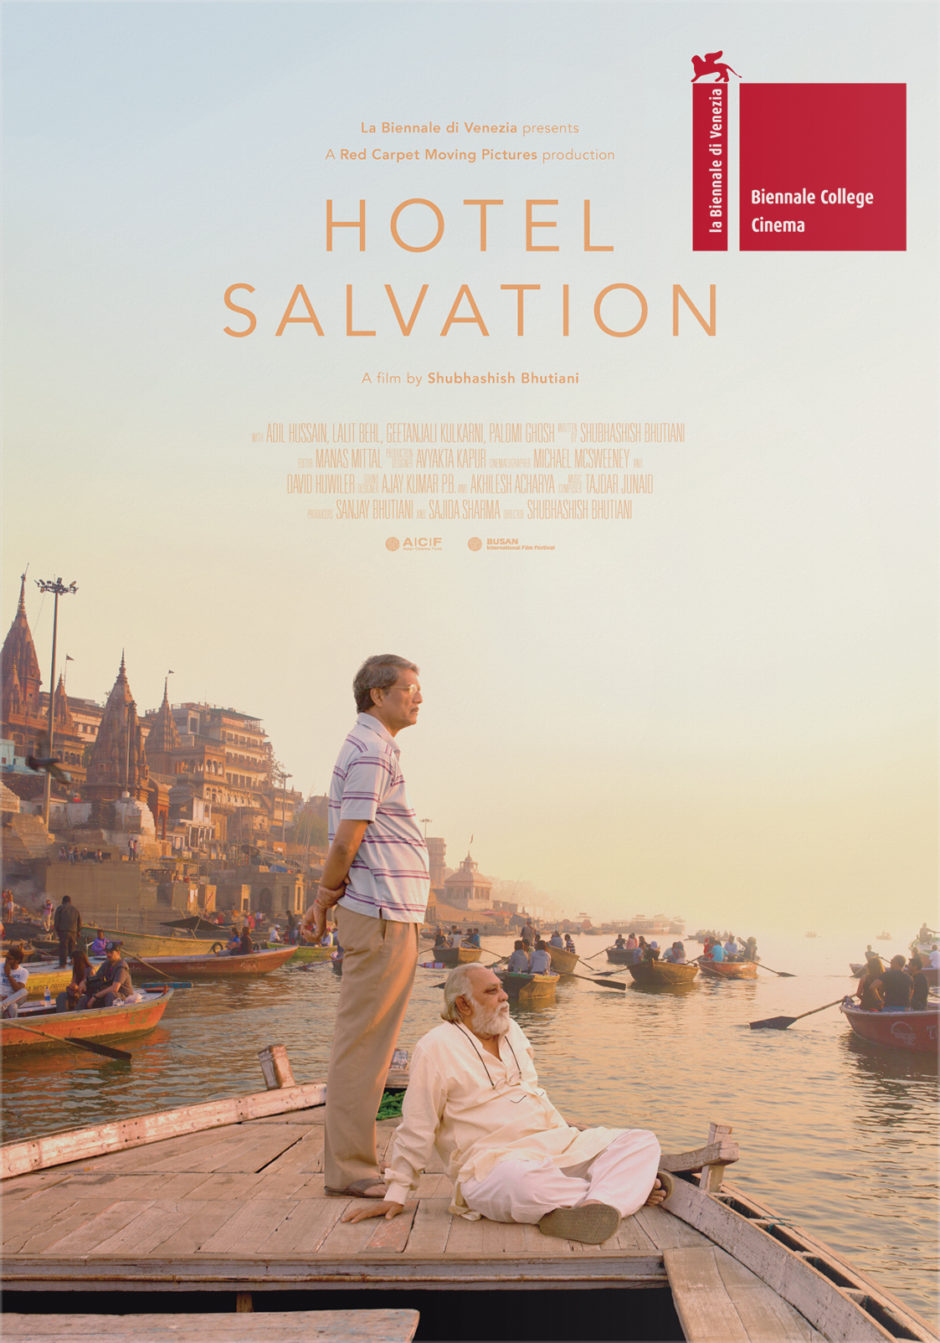 Poster Hotel Salvation